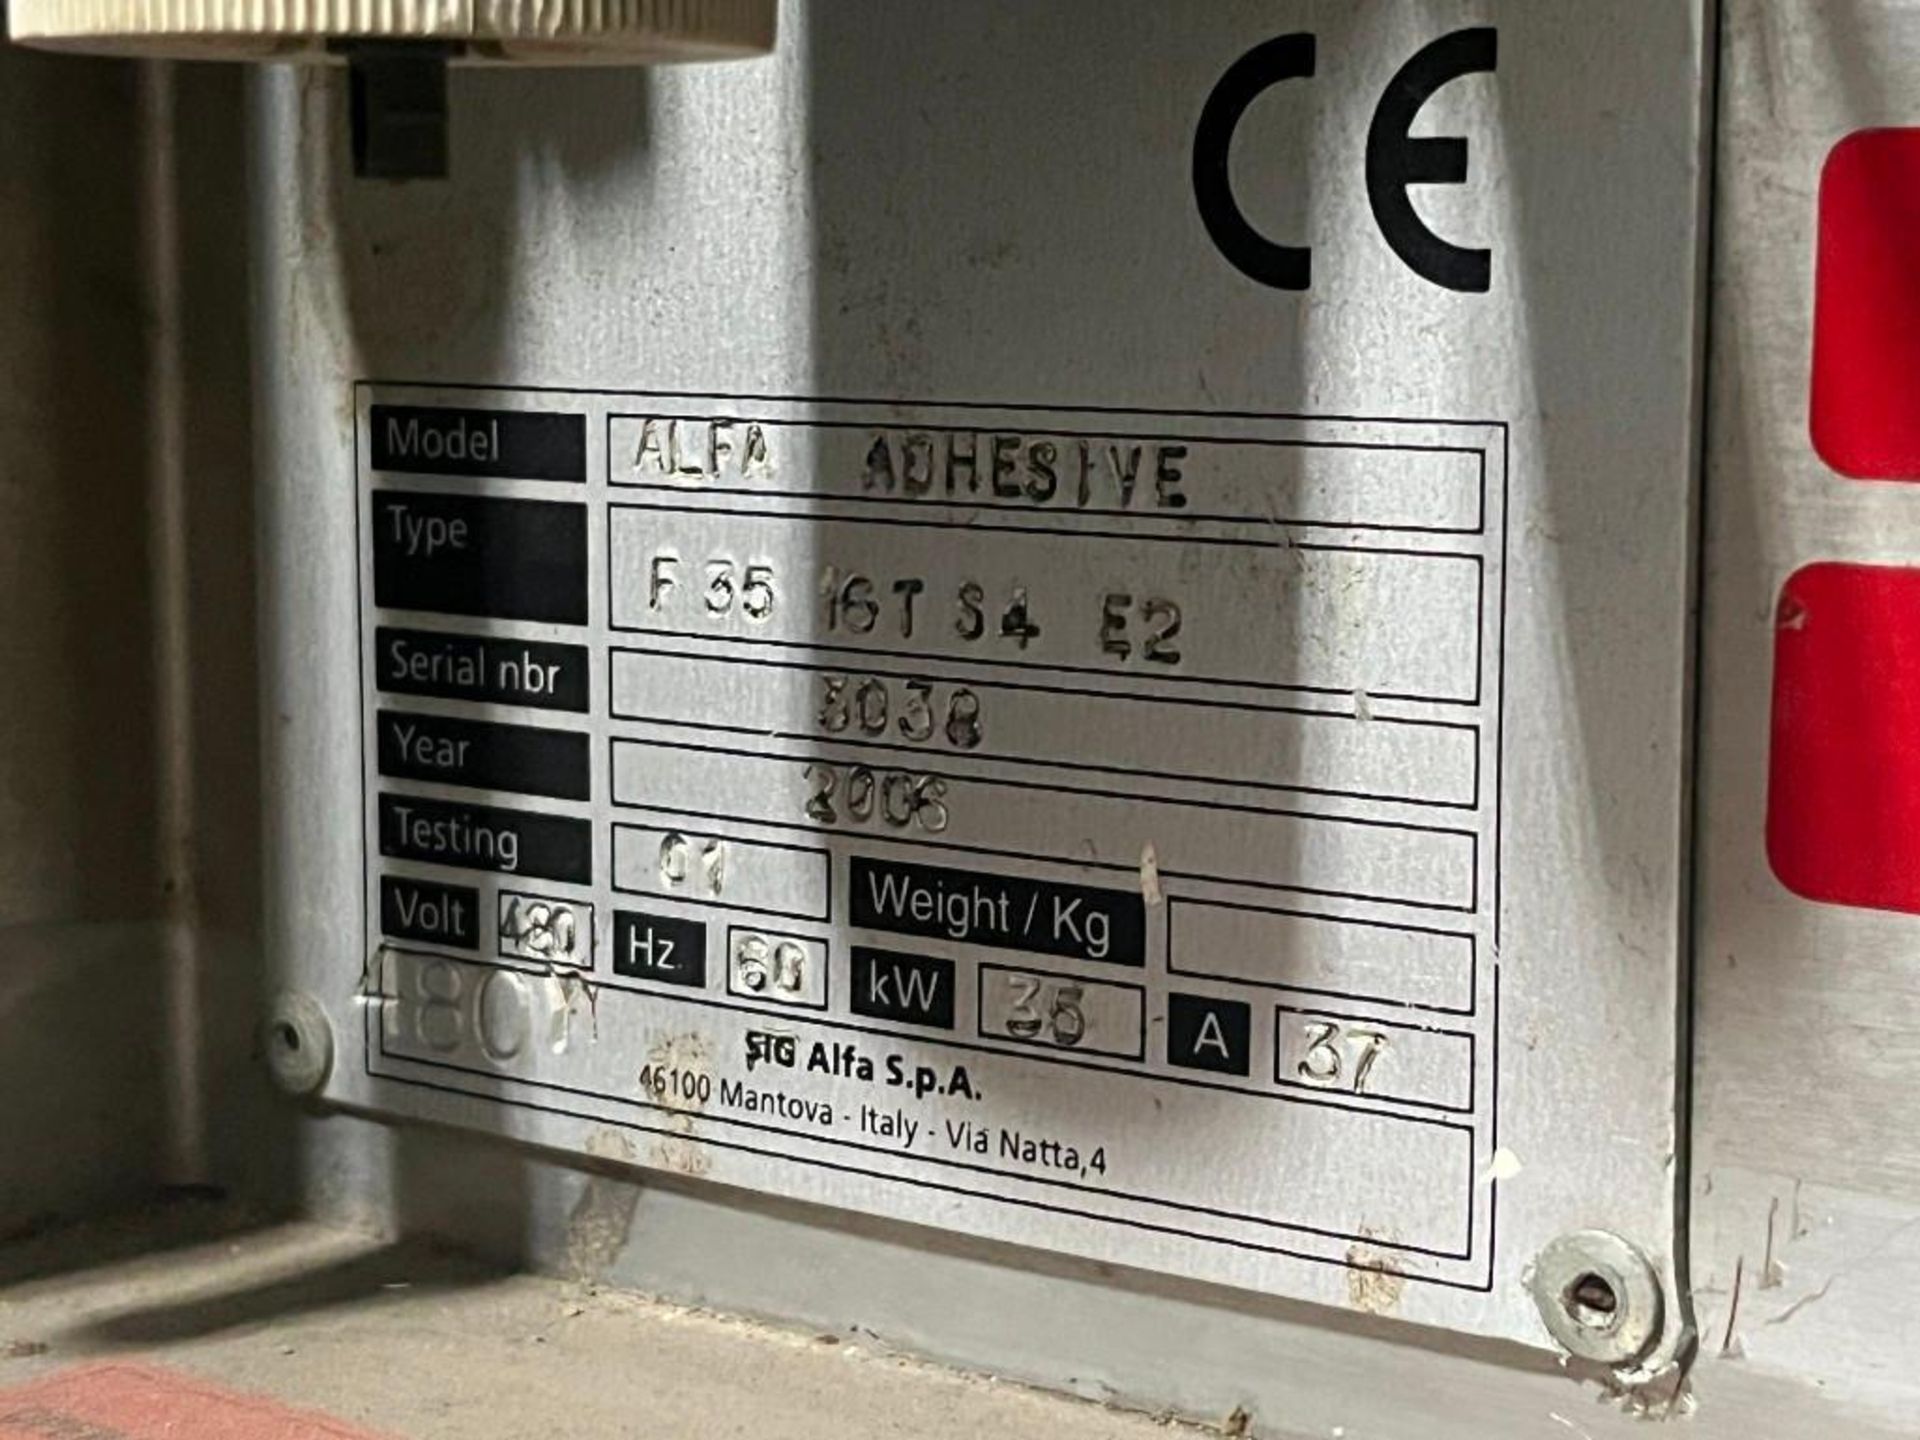 Sidel Pressure Sensitive 16-Station Rotary Labeler, Model ALFA ADHESIVE, S/N: F 35 16T 54 E2. Has (4 - Image 73 of 74